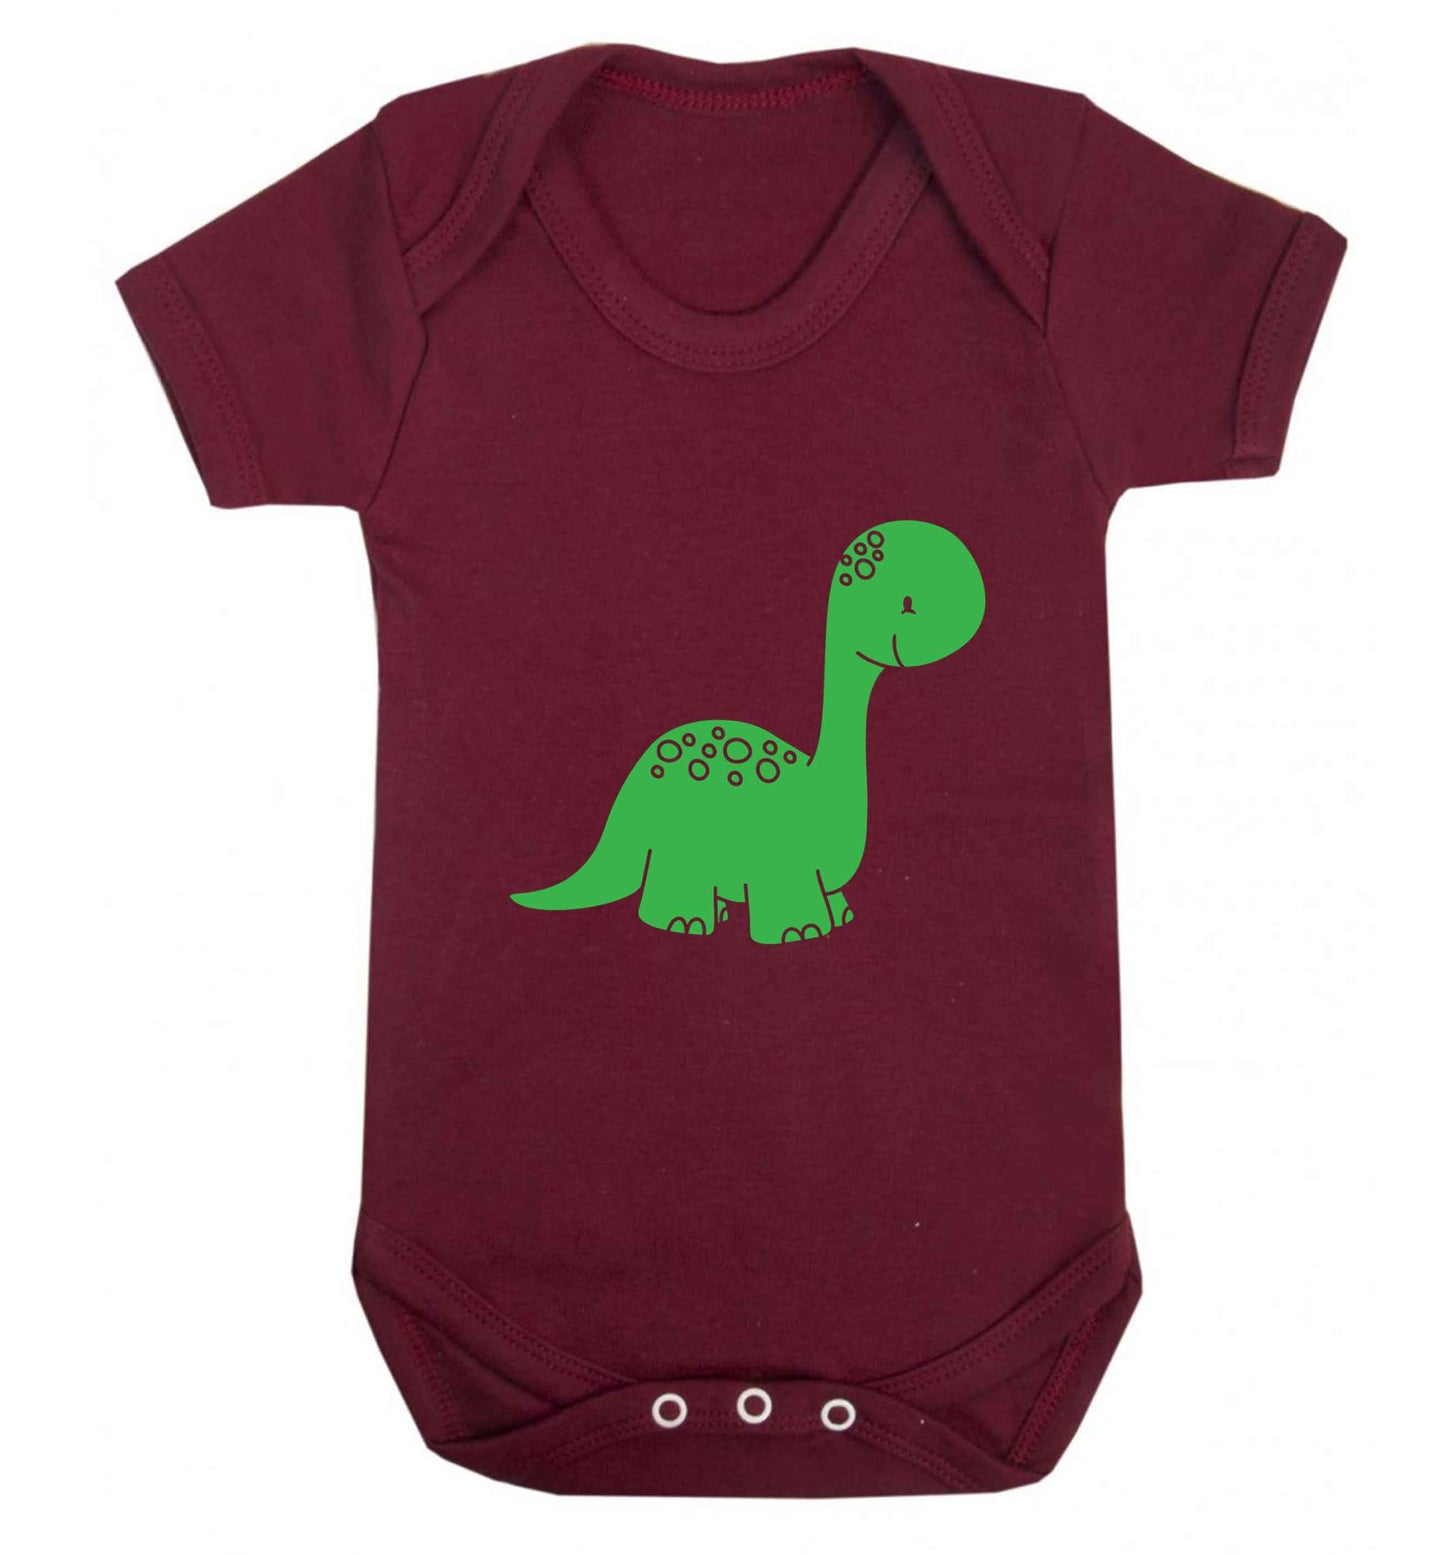 Dinosaur illustration baby vest maroon 18-24 months